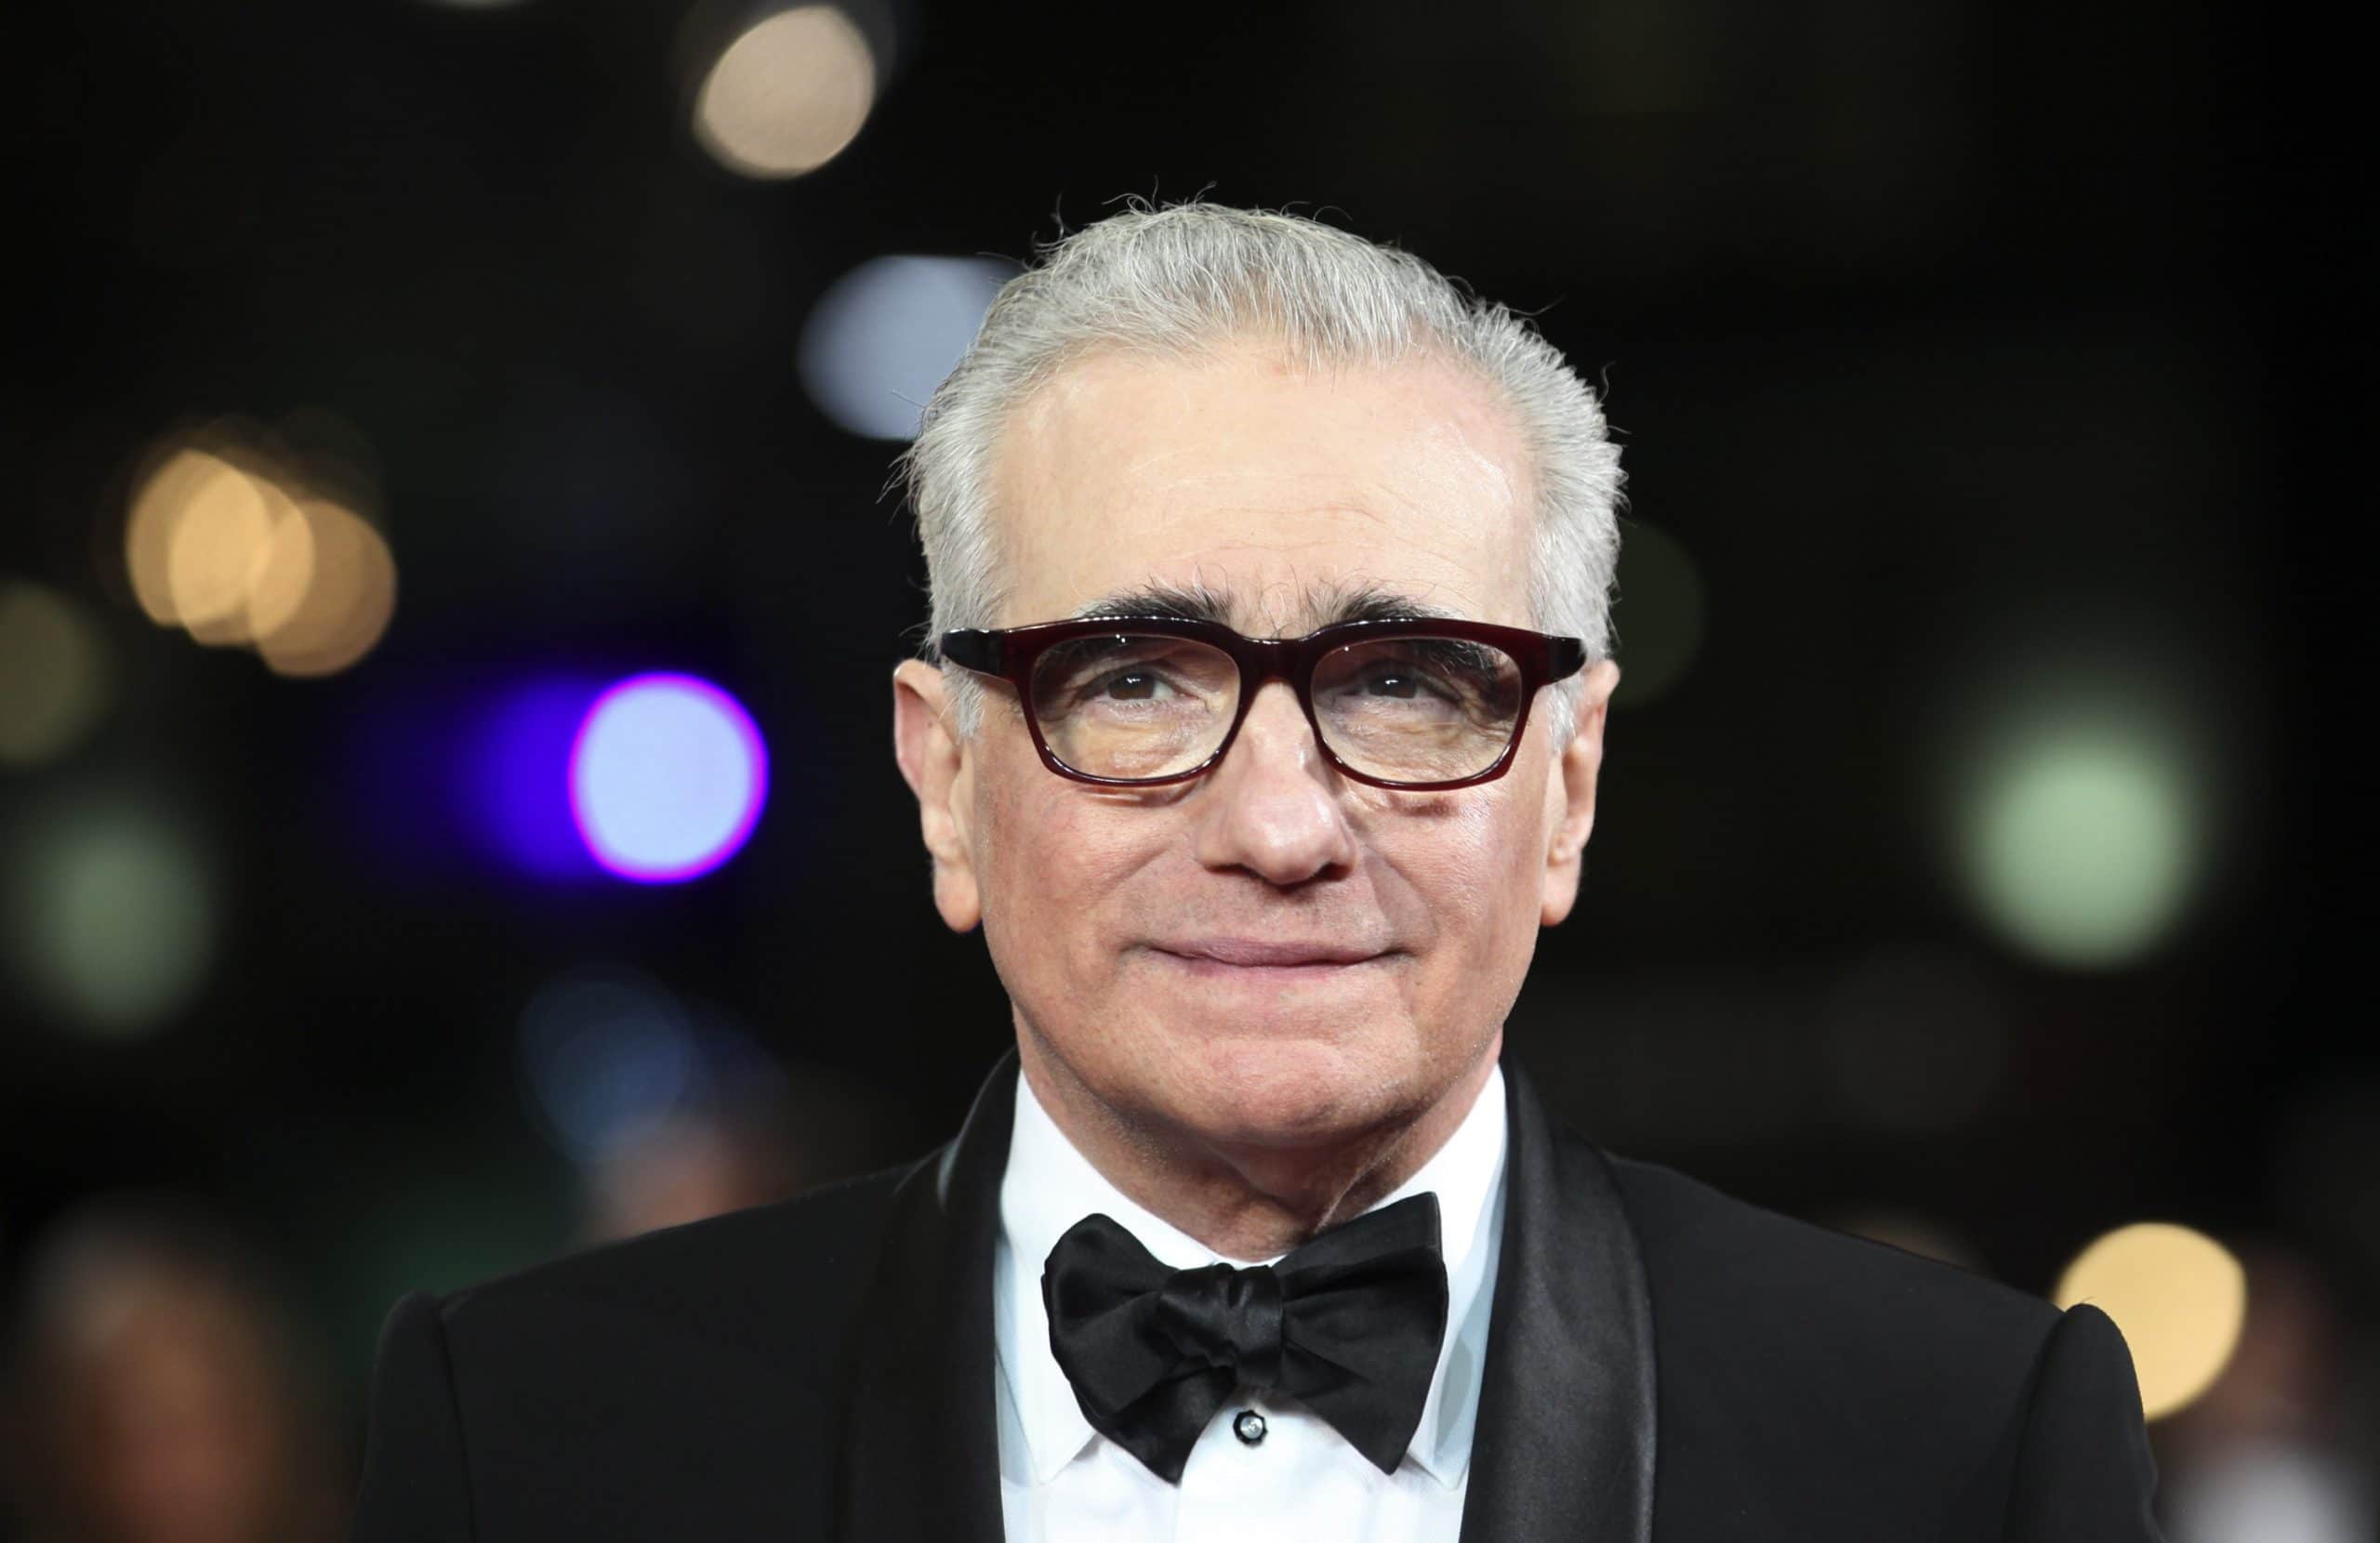 Diretor Martin Scorsese